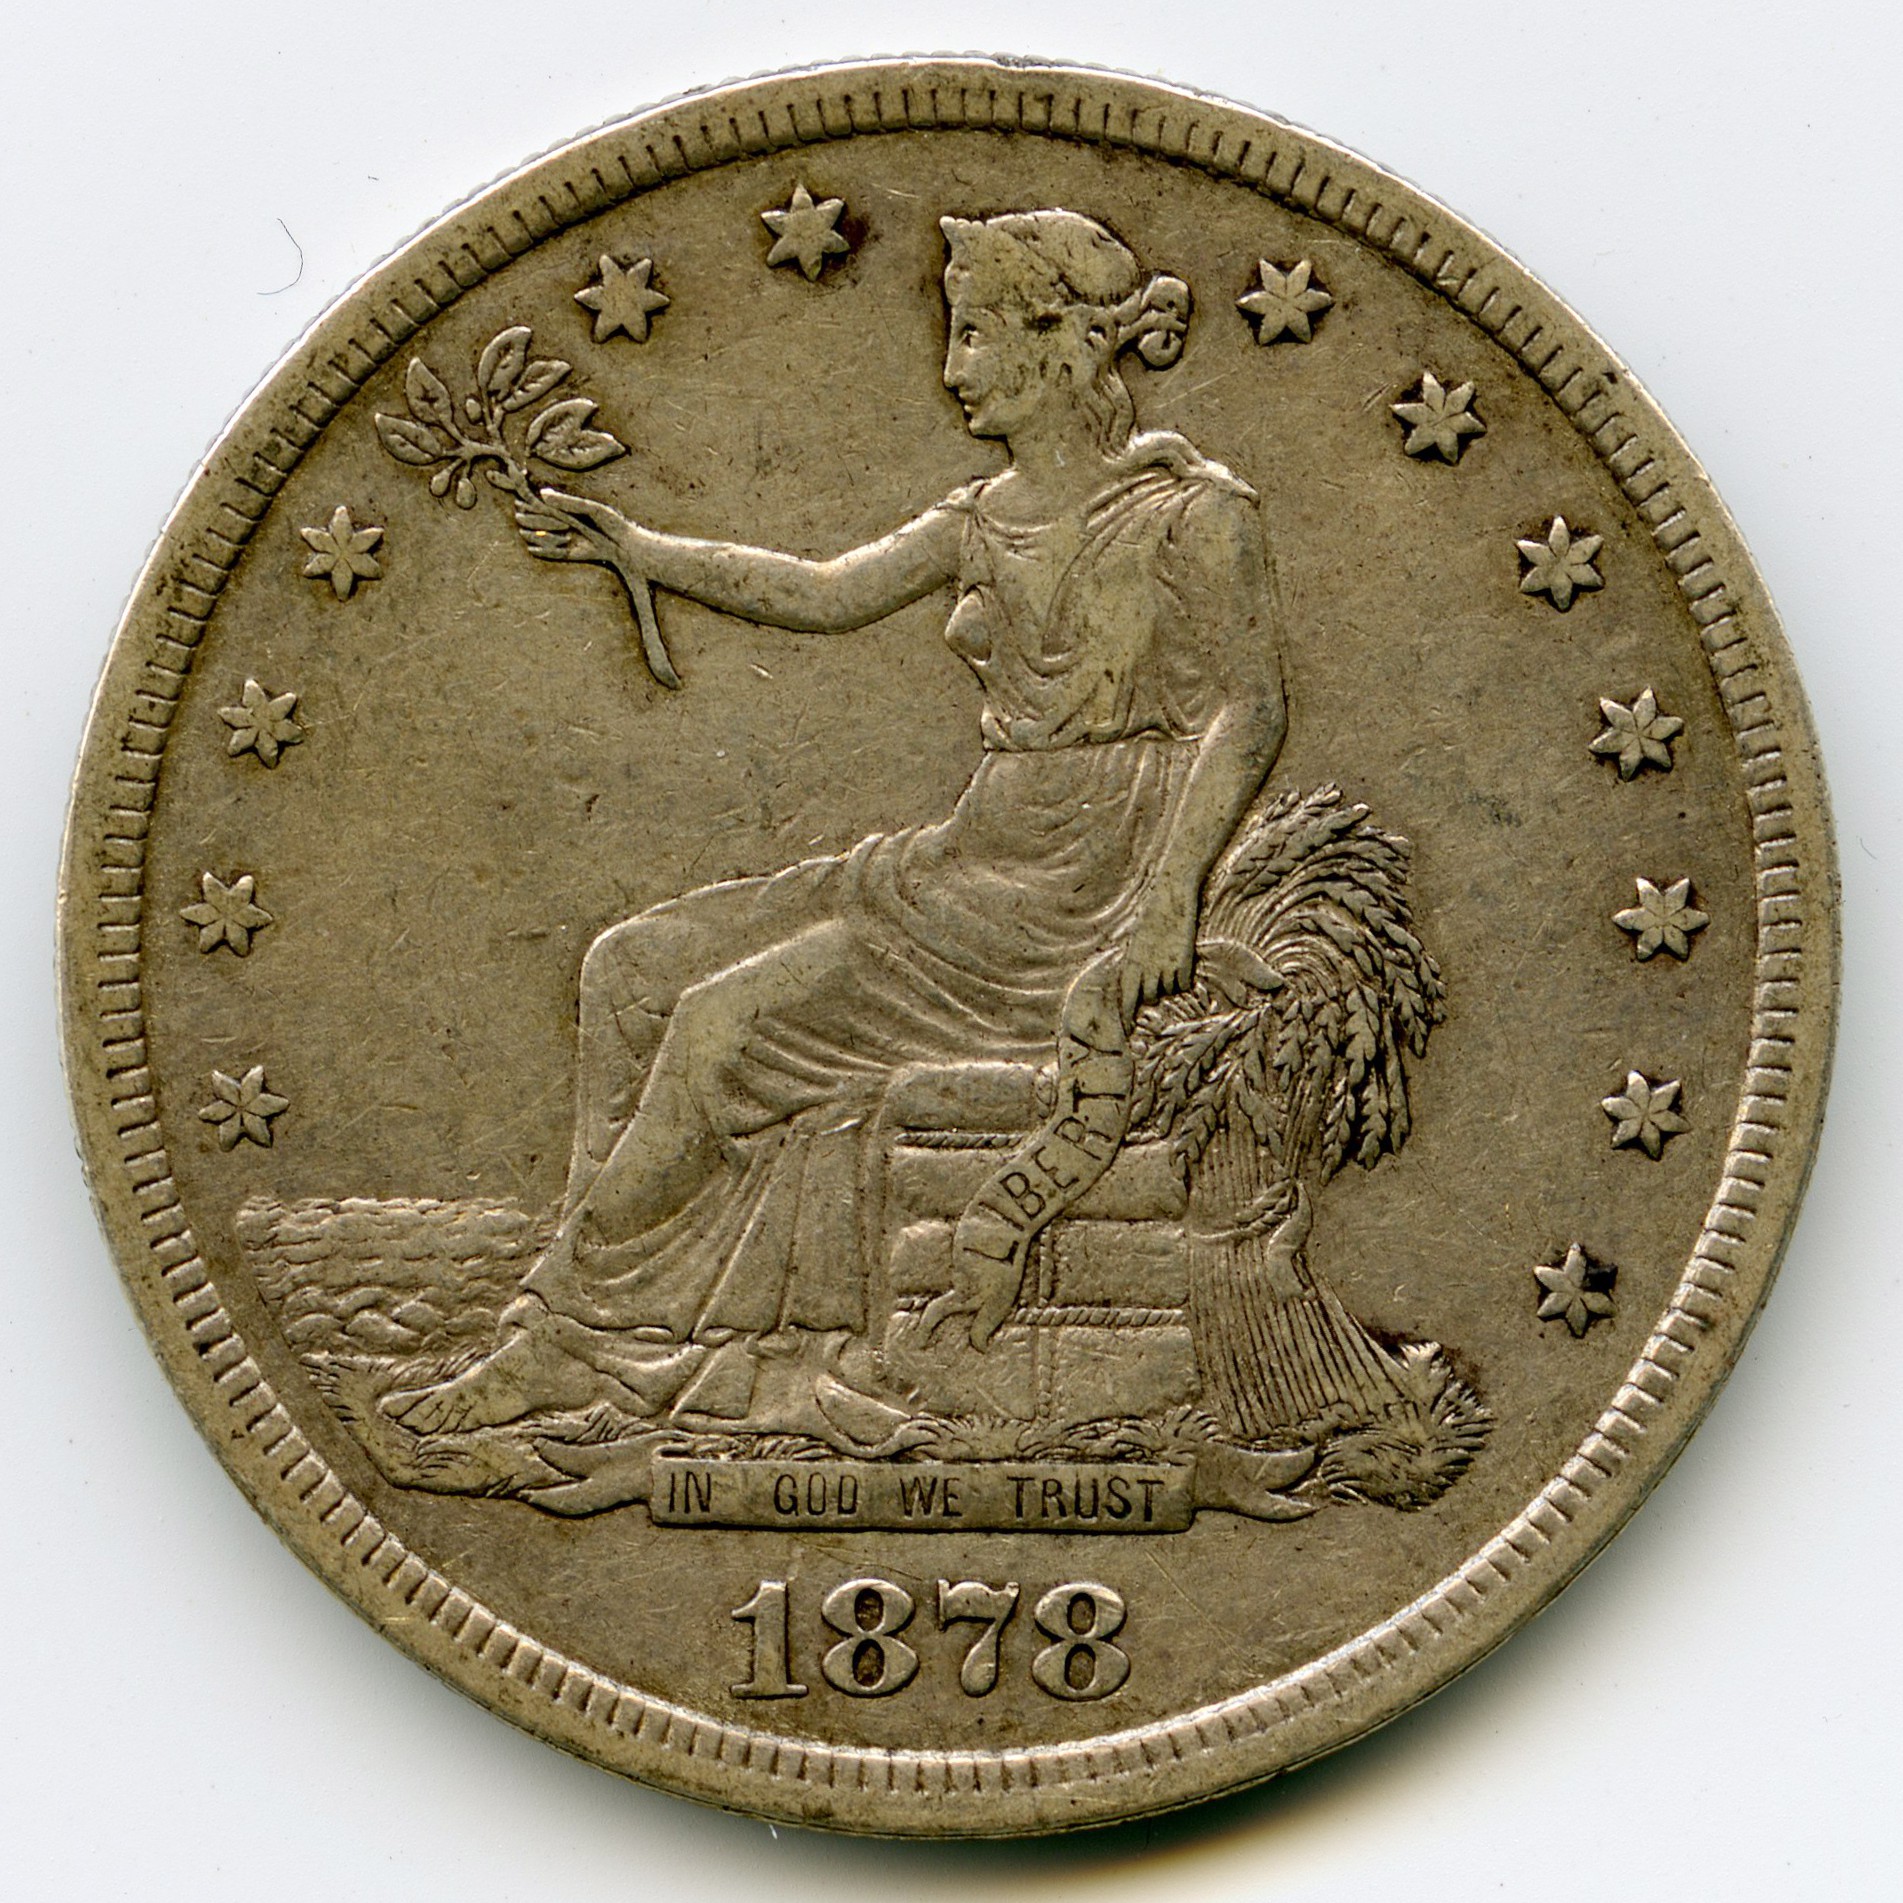 USA - Trade Dollar - 1878 S avers